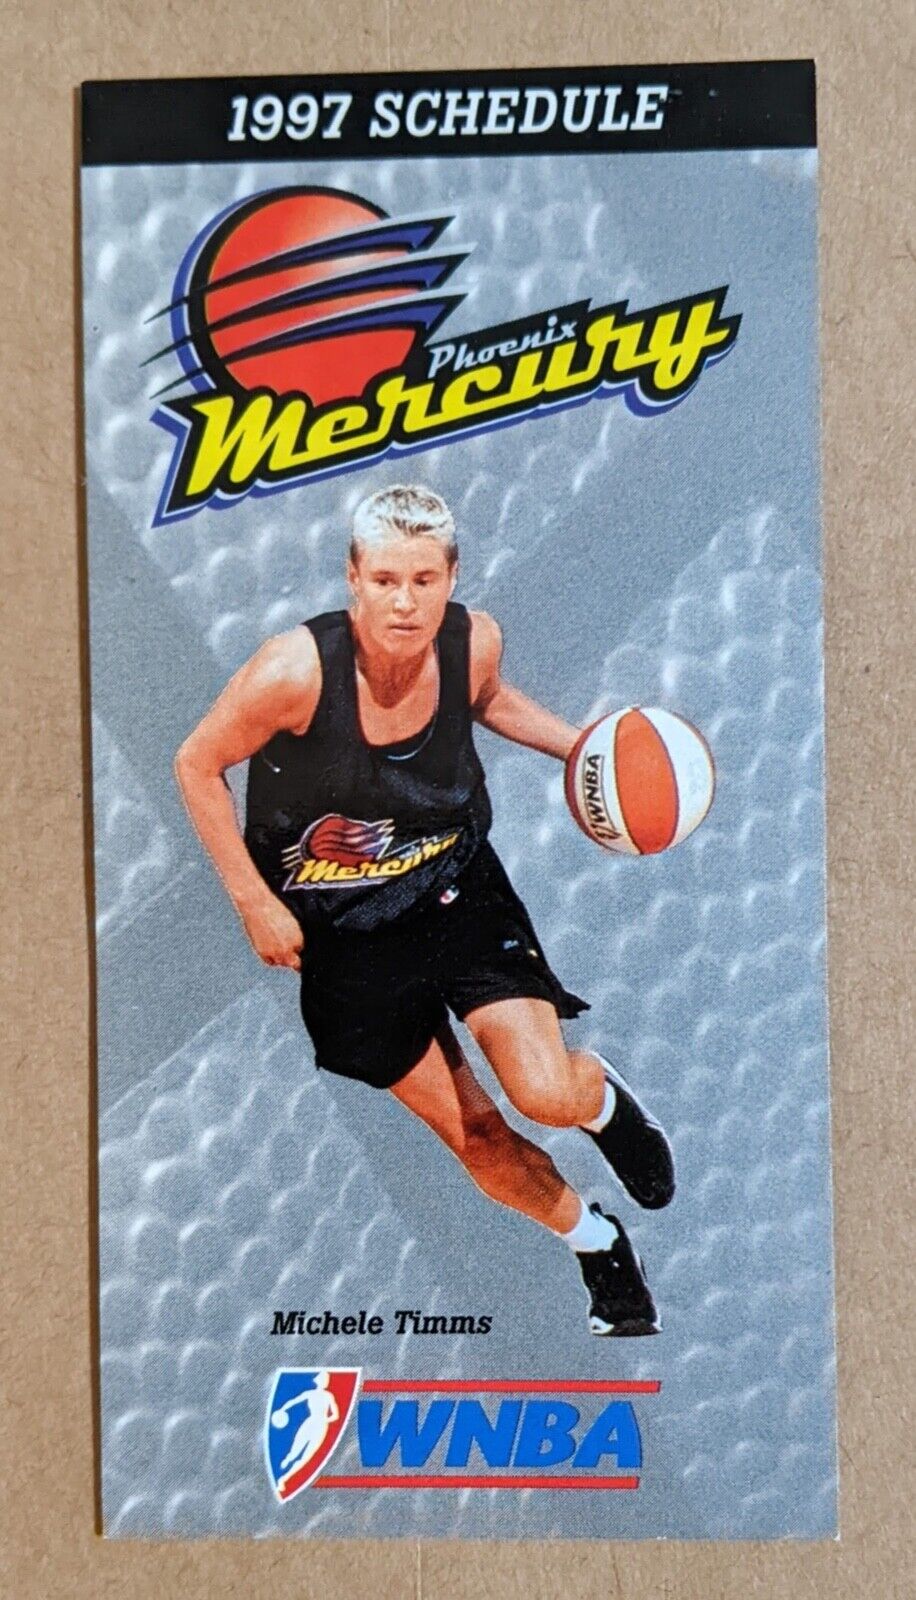 1997 Phoenix Mercury Basketball Pocket Schedule WNBA ????????